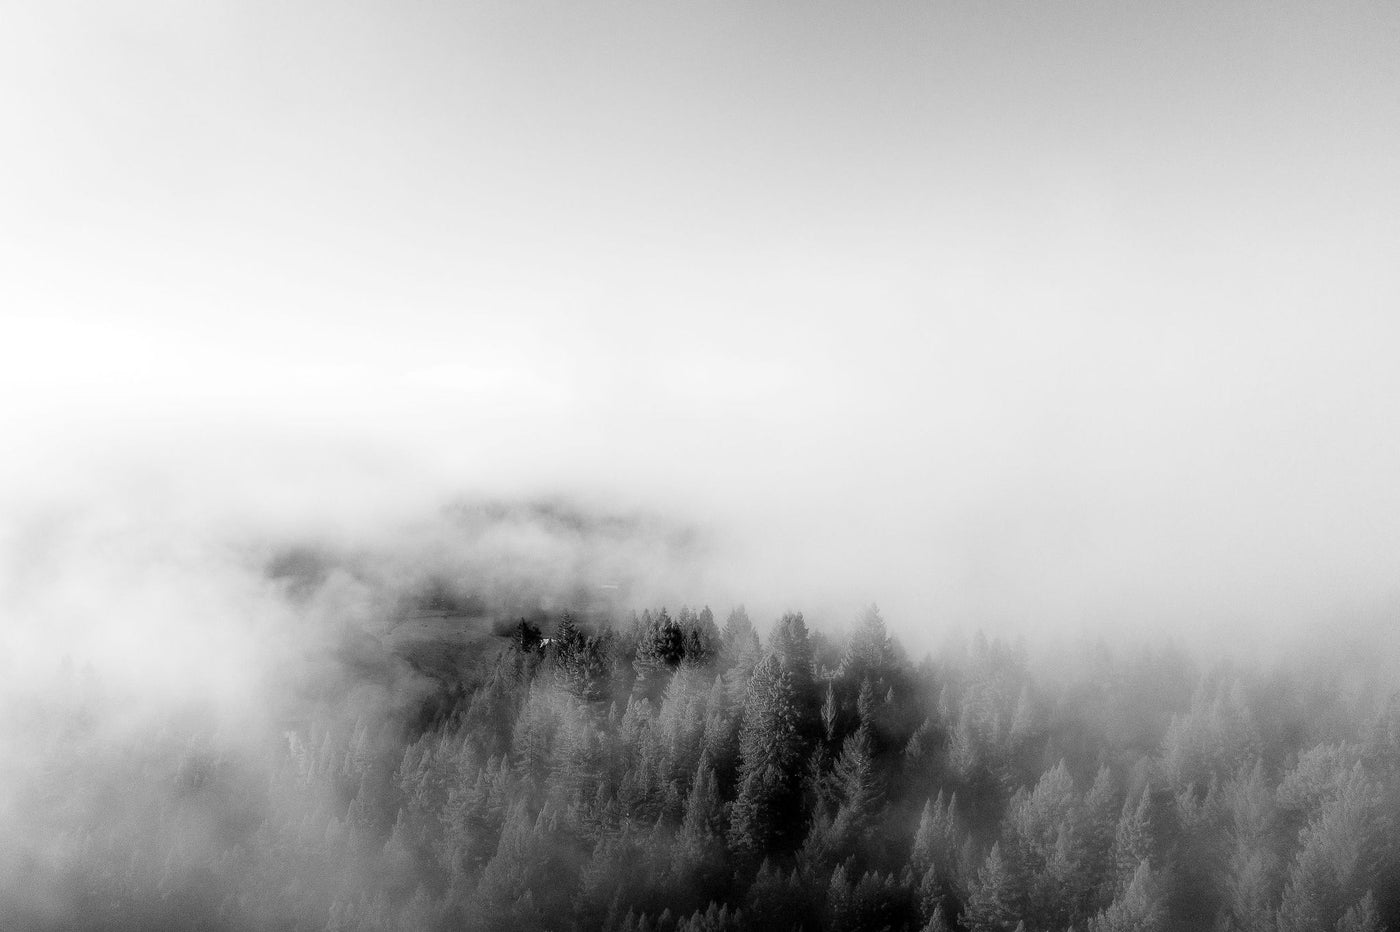 Redwoods in the Fog